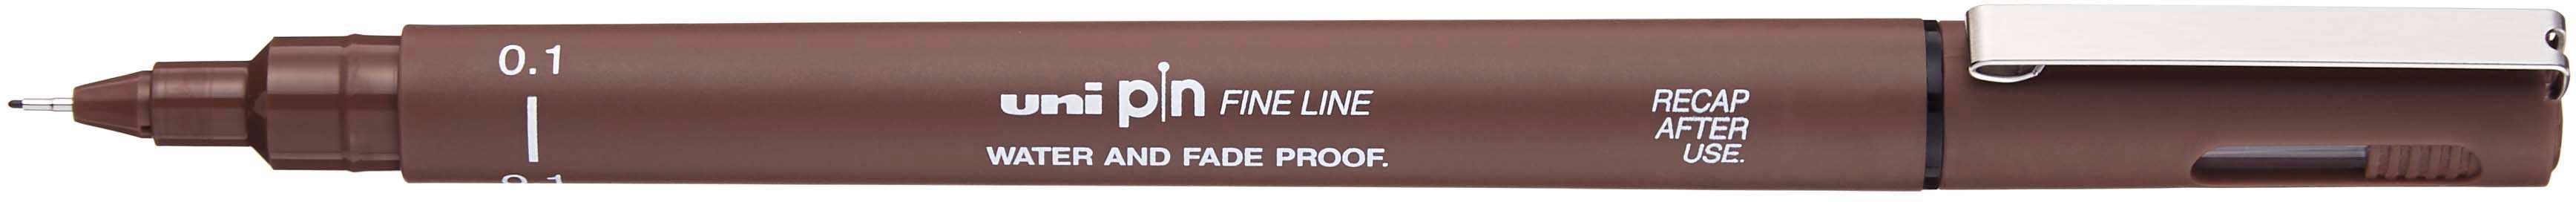 UNI-BALL Fineliner Pin 0.1mm PIN01-200(S) Sepia sepia sepia